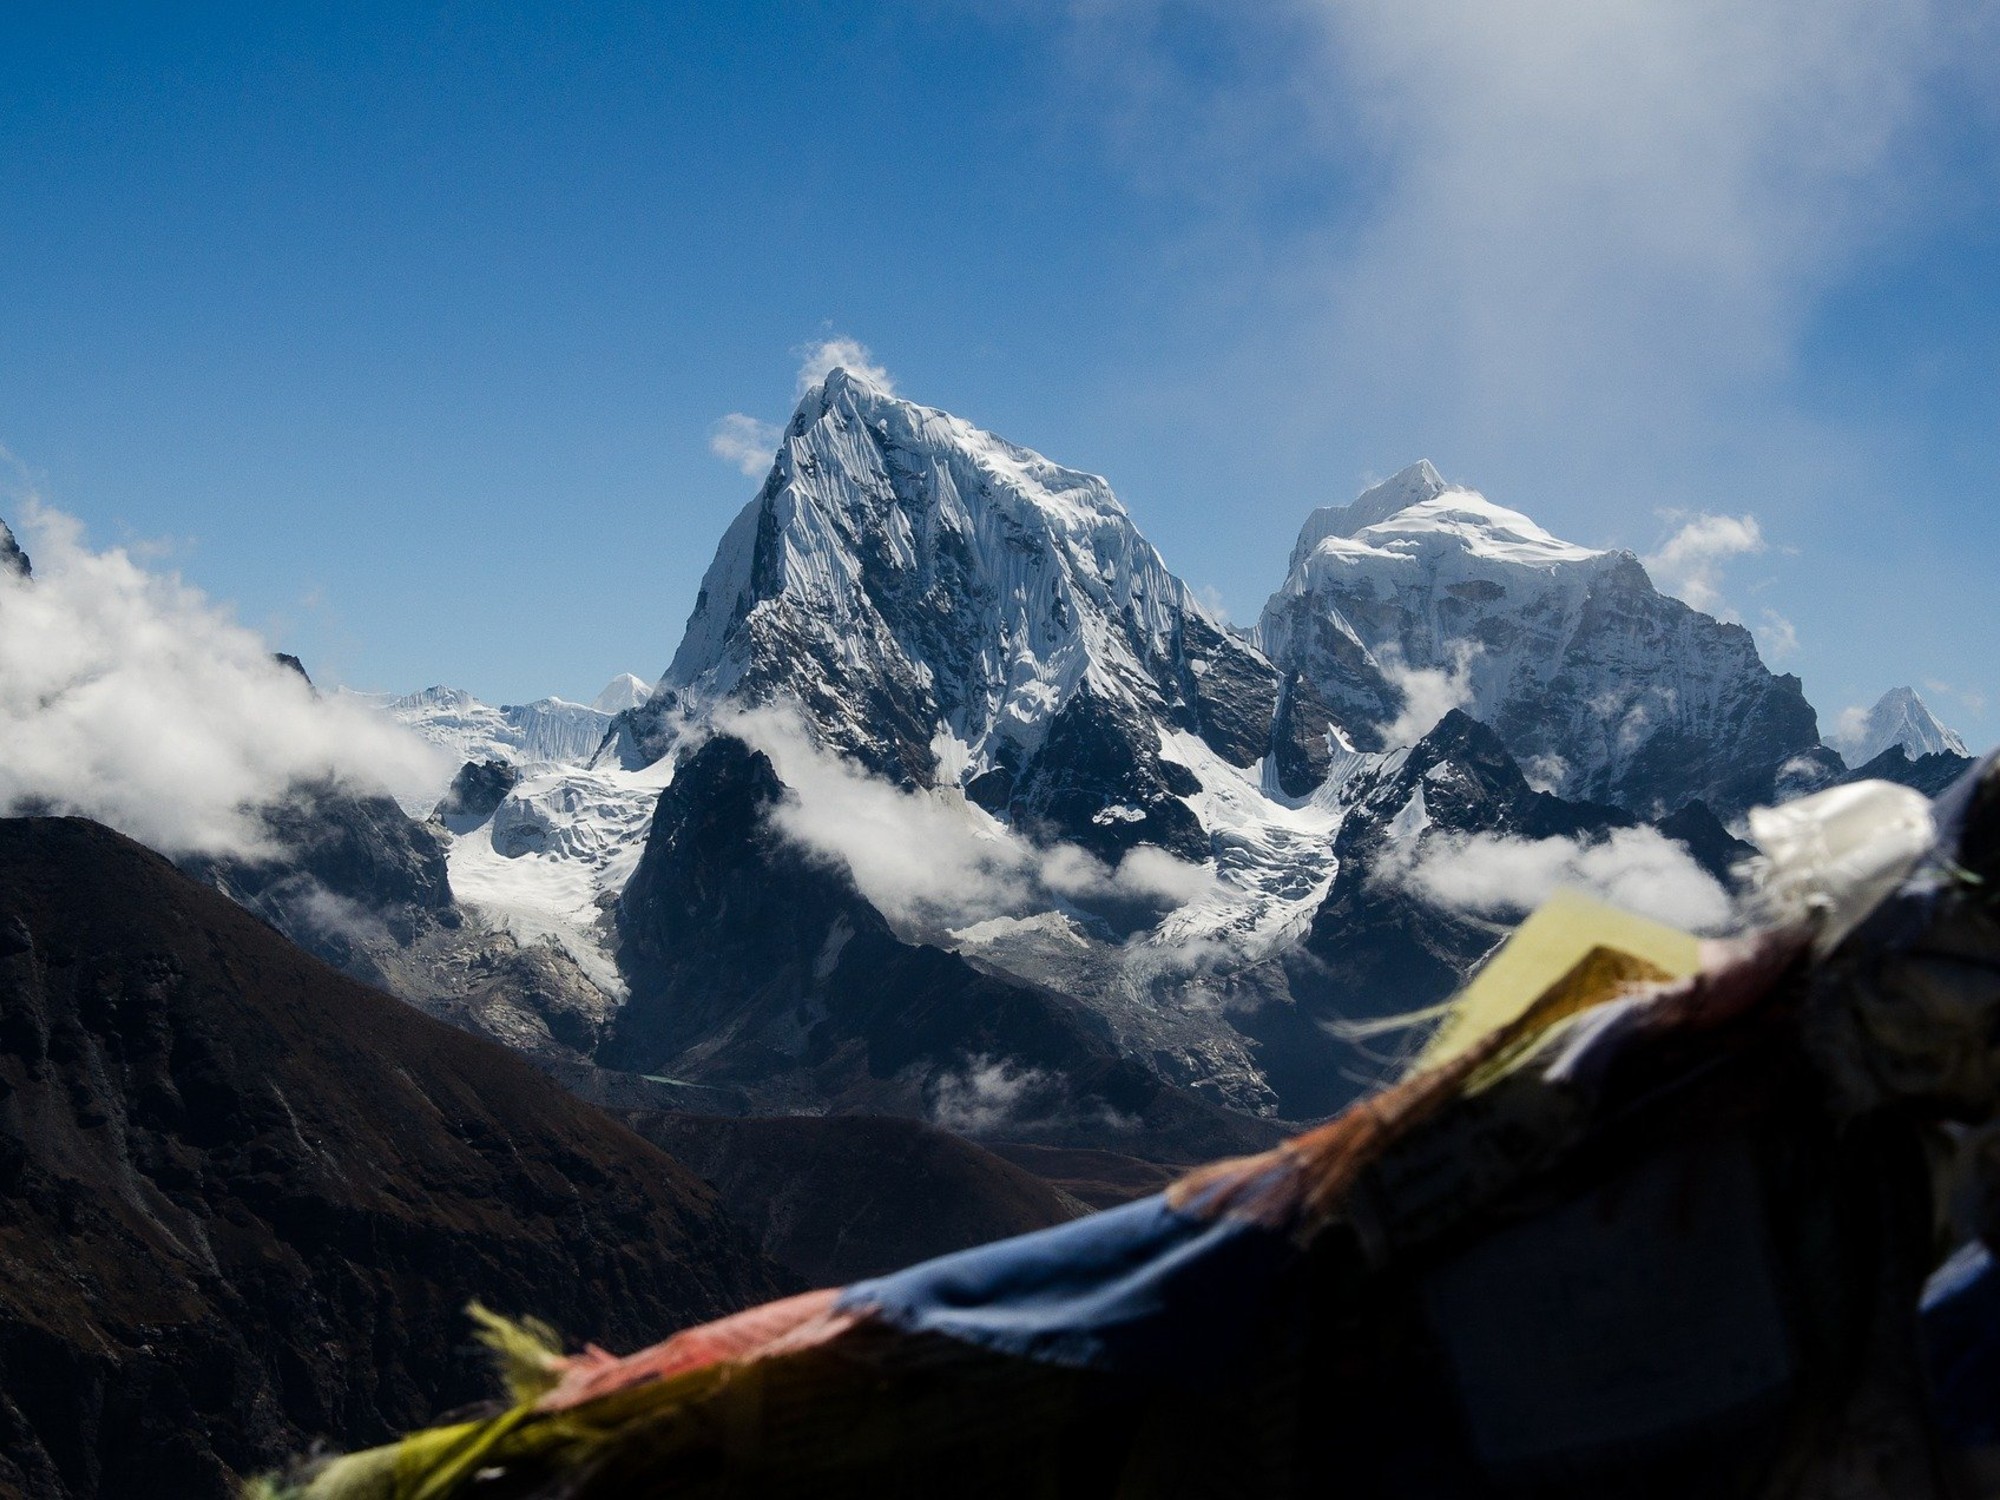 Cold War-era satellites bring bad news about melting glaciers around Everest